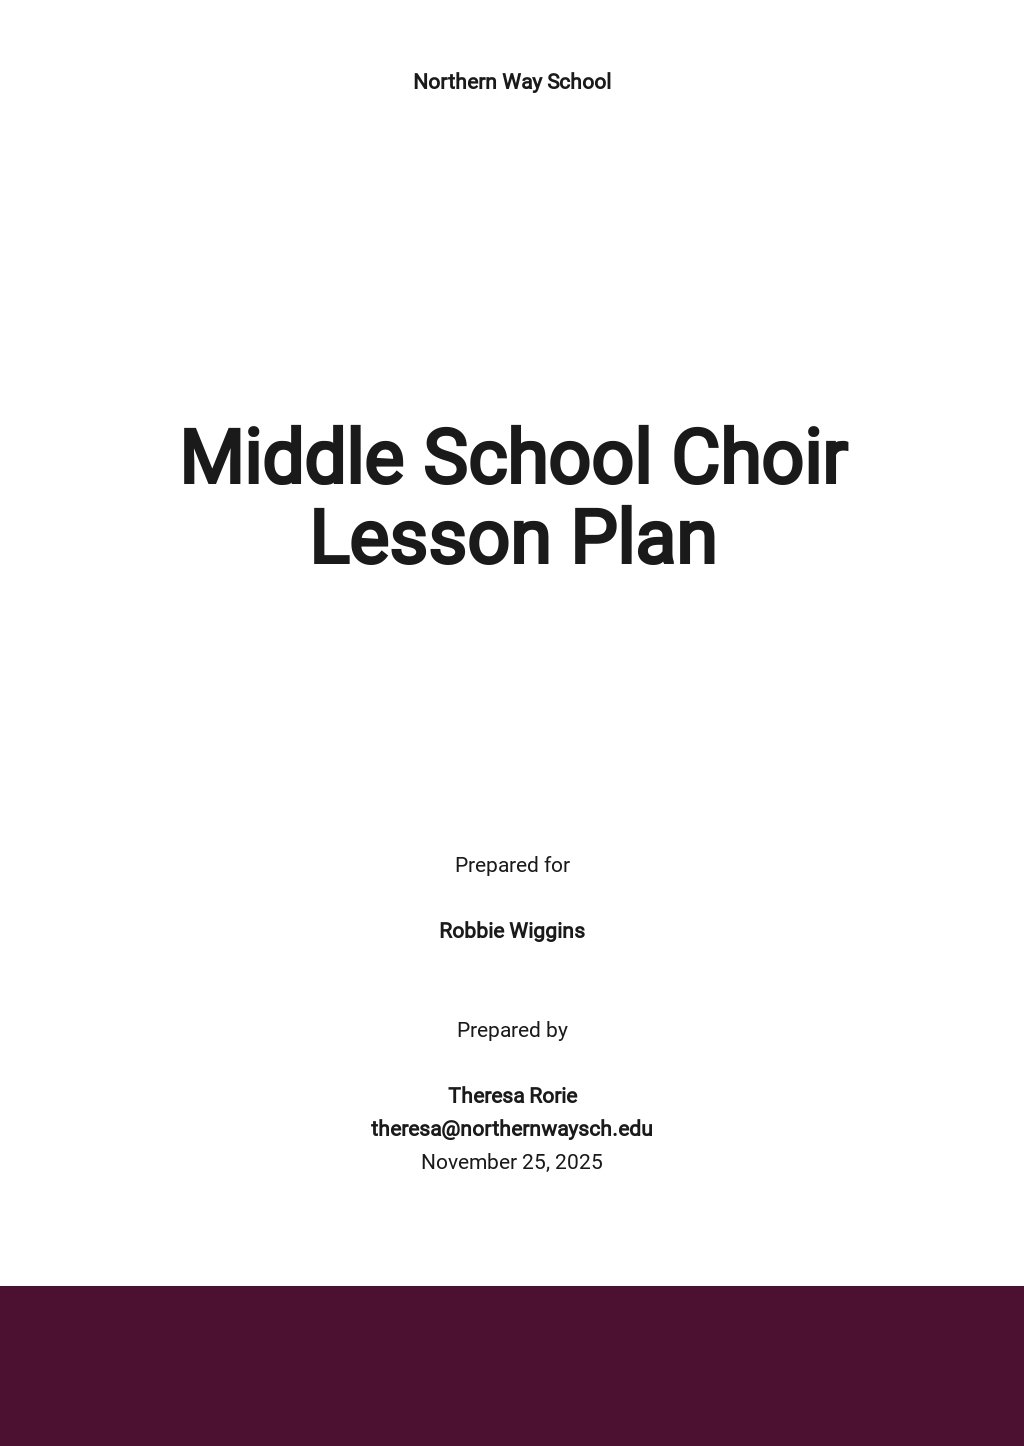 Middle School Choir Lesson Plan Template